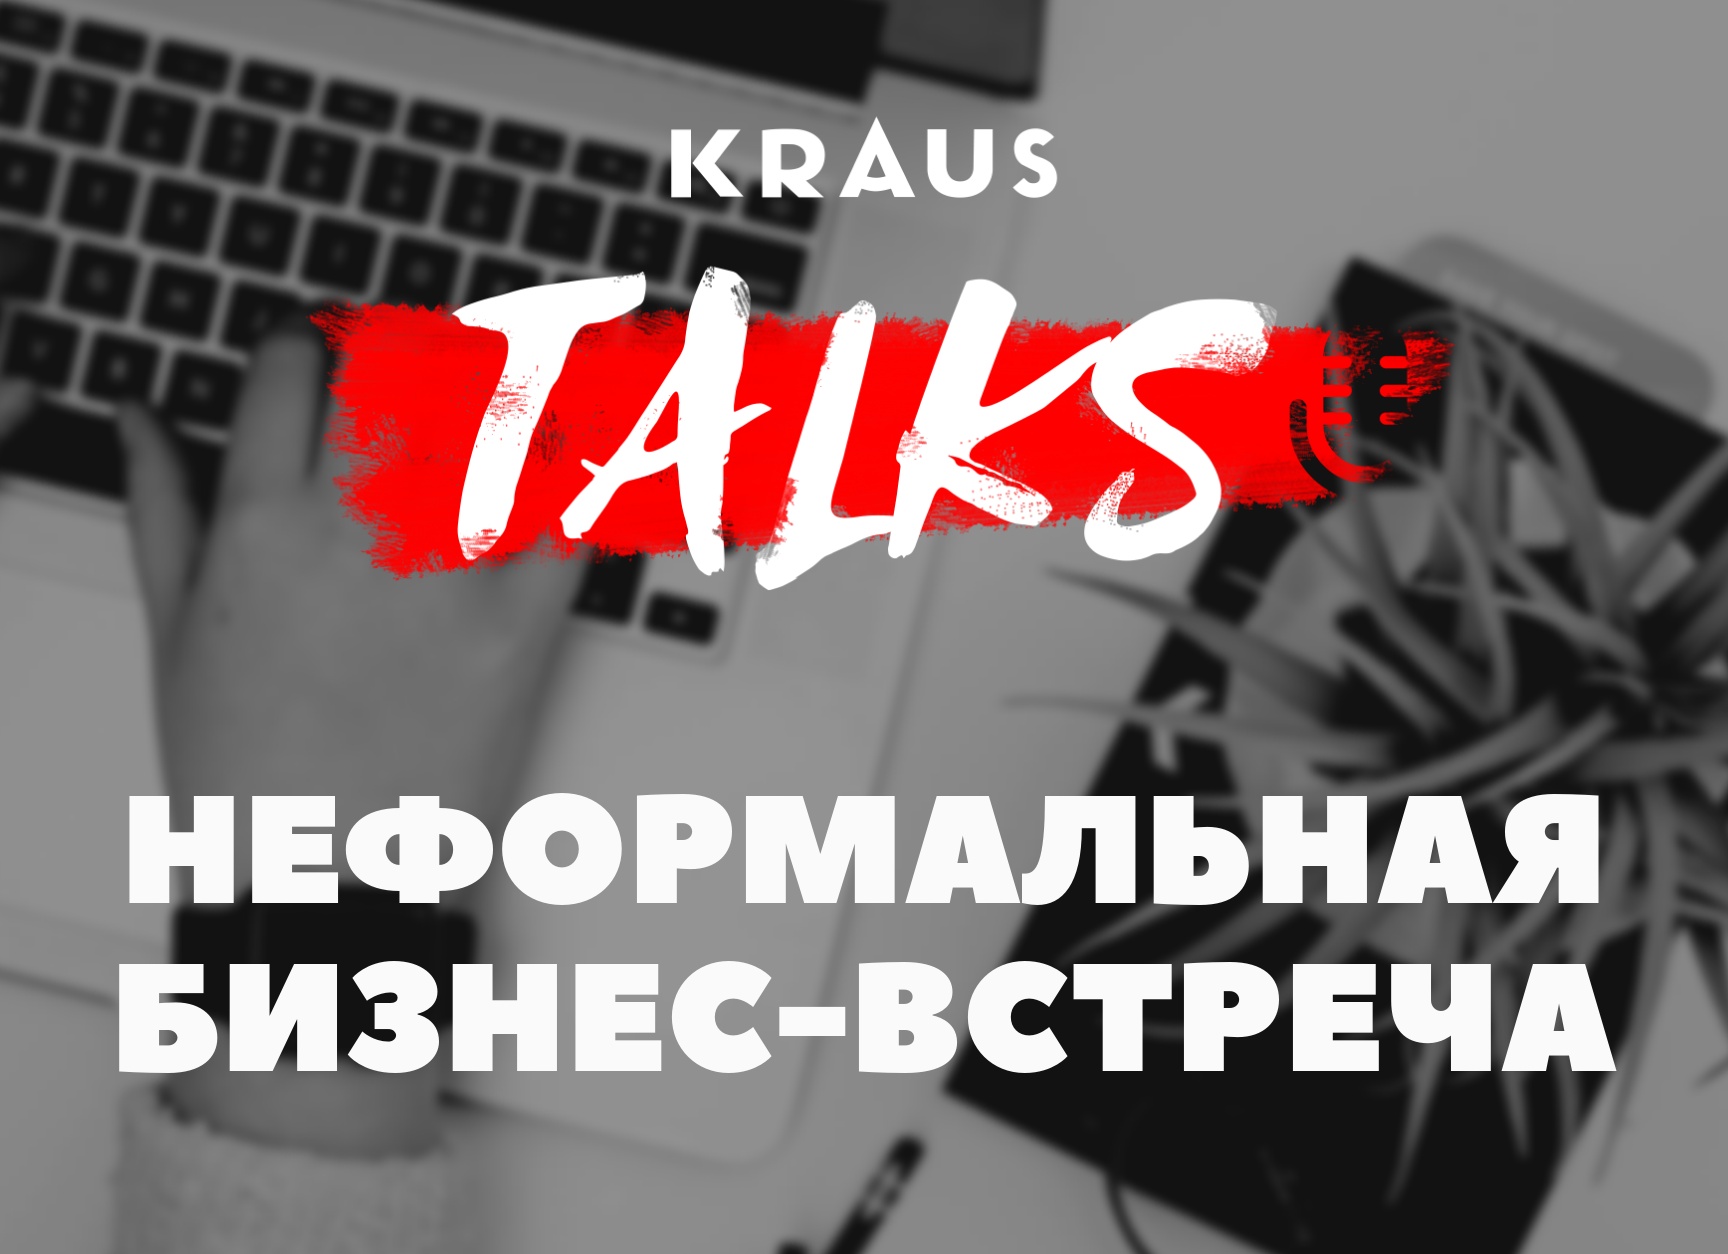 Kraus Talks – совершенно новый формат мероприятий 